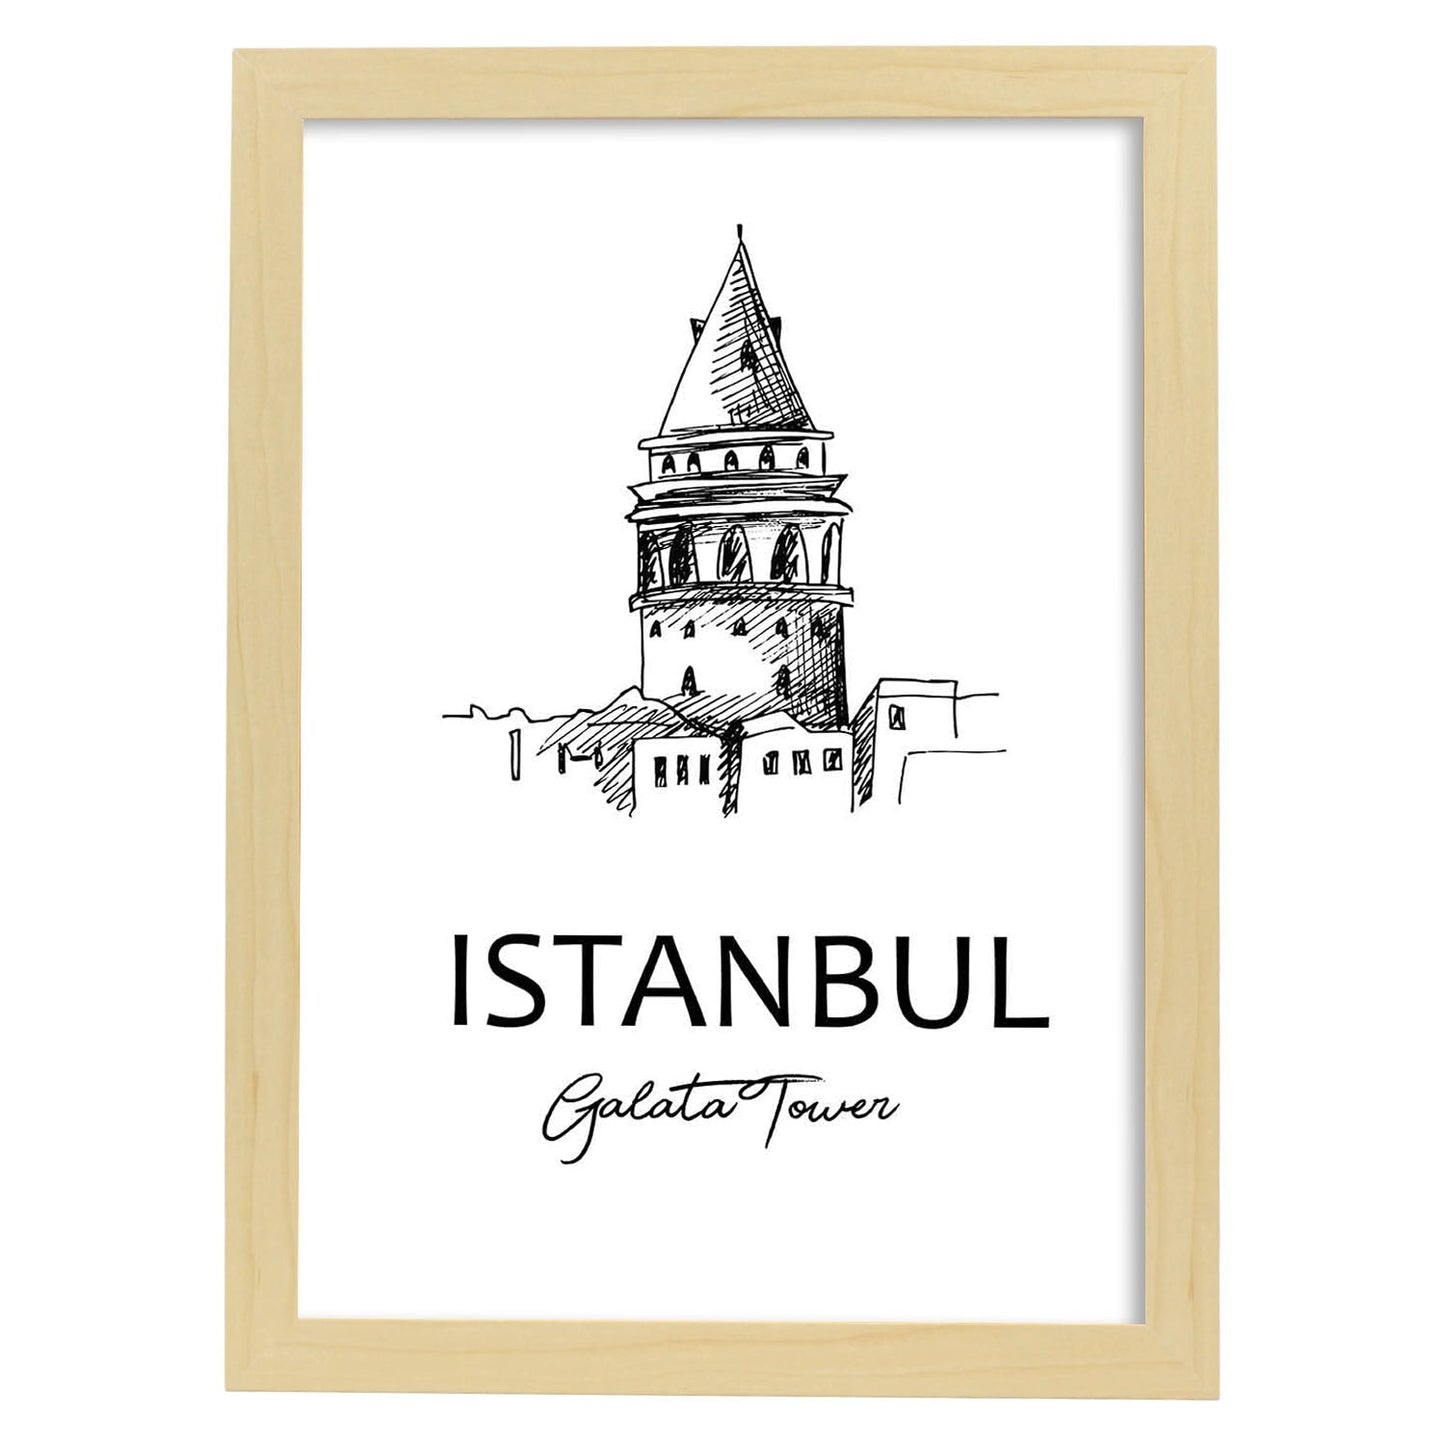 Poster de Estambul - Torre galata. Láminas con monumentos de ciudades.-Artwork-Nacnic-A3-Marco Madera clara-Nacnic Estudio SL